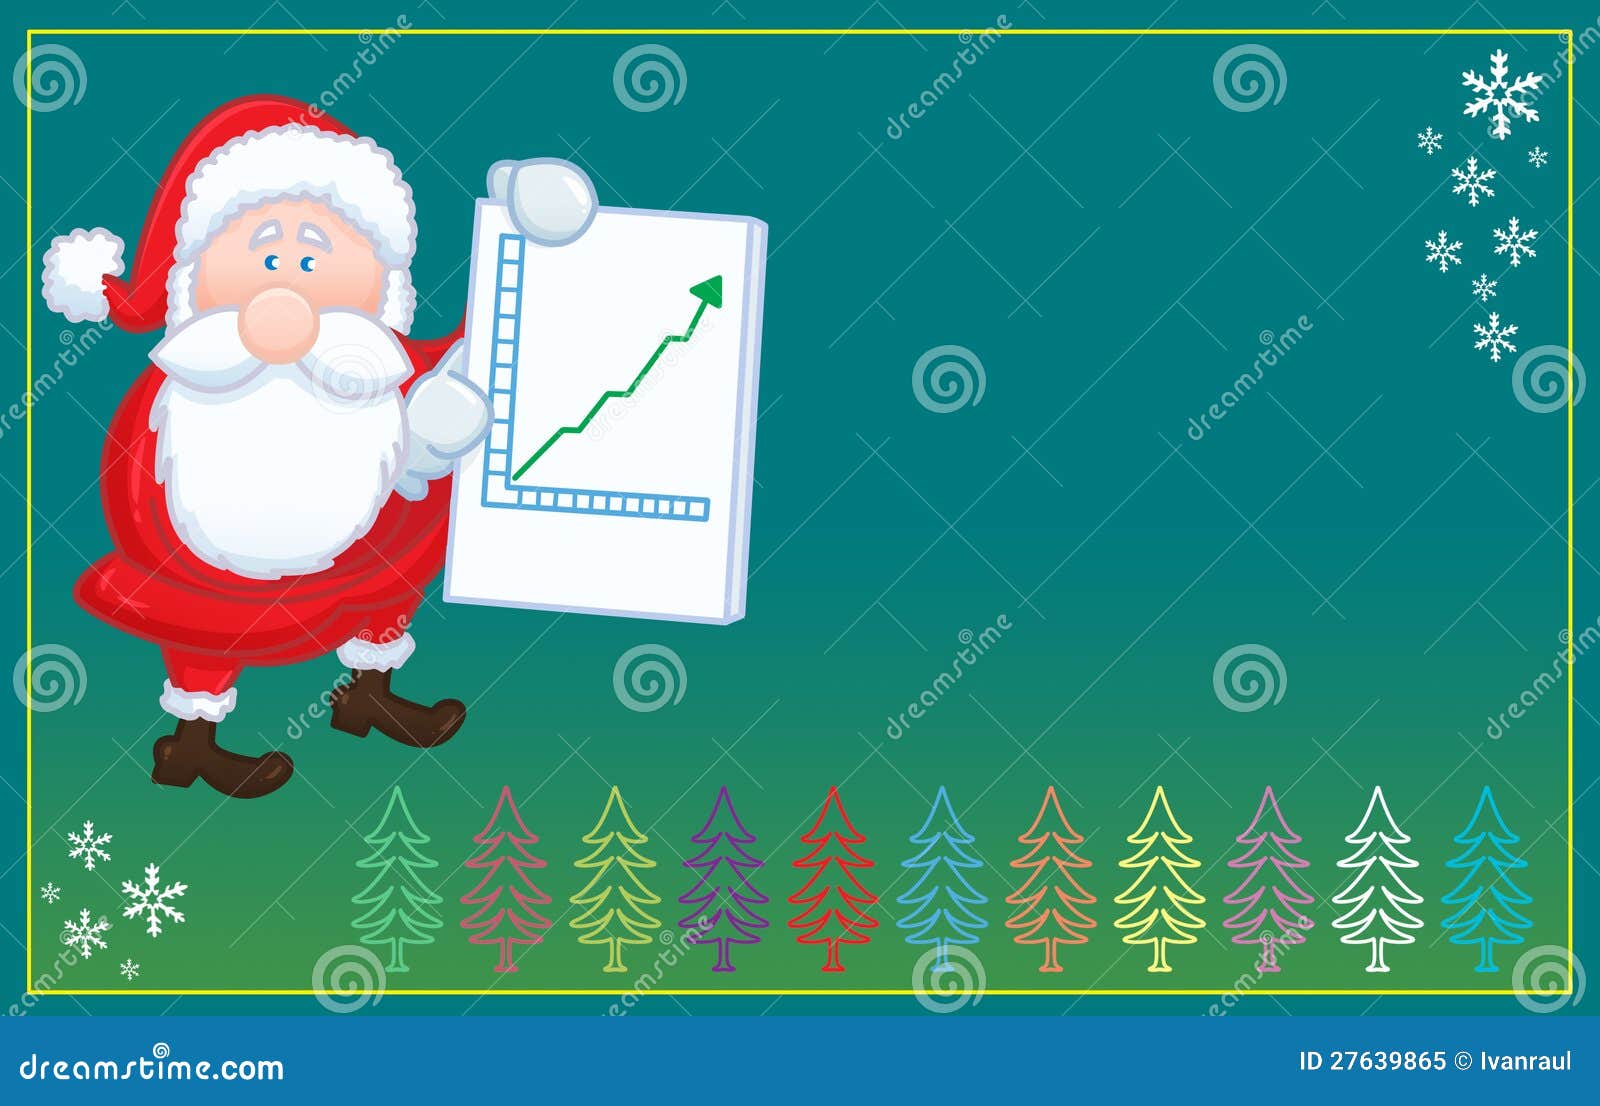 Santa Claus Chart